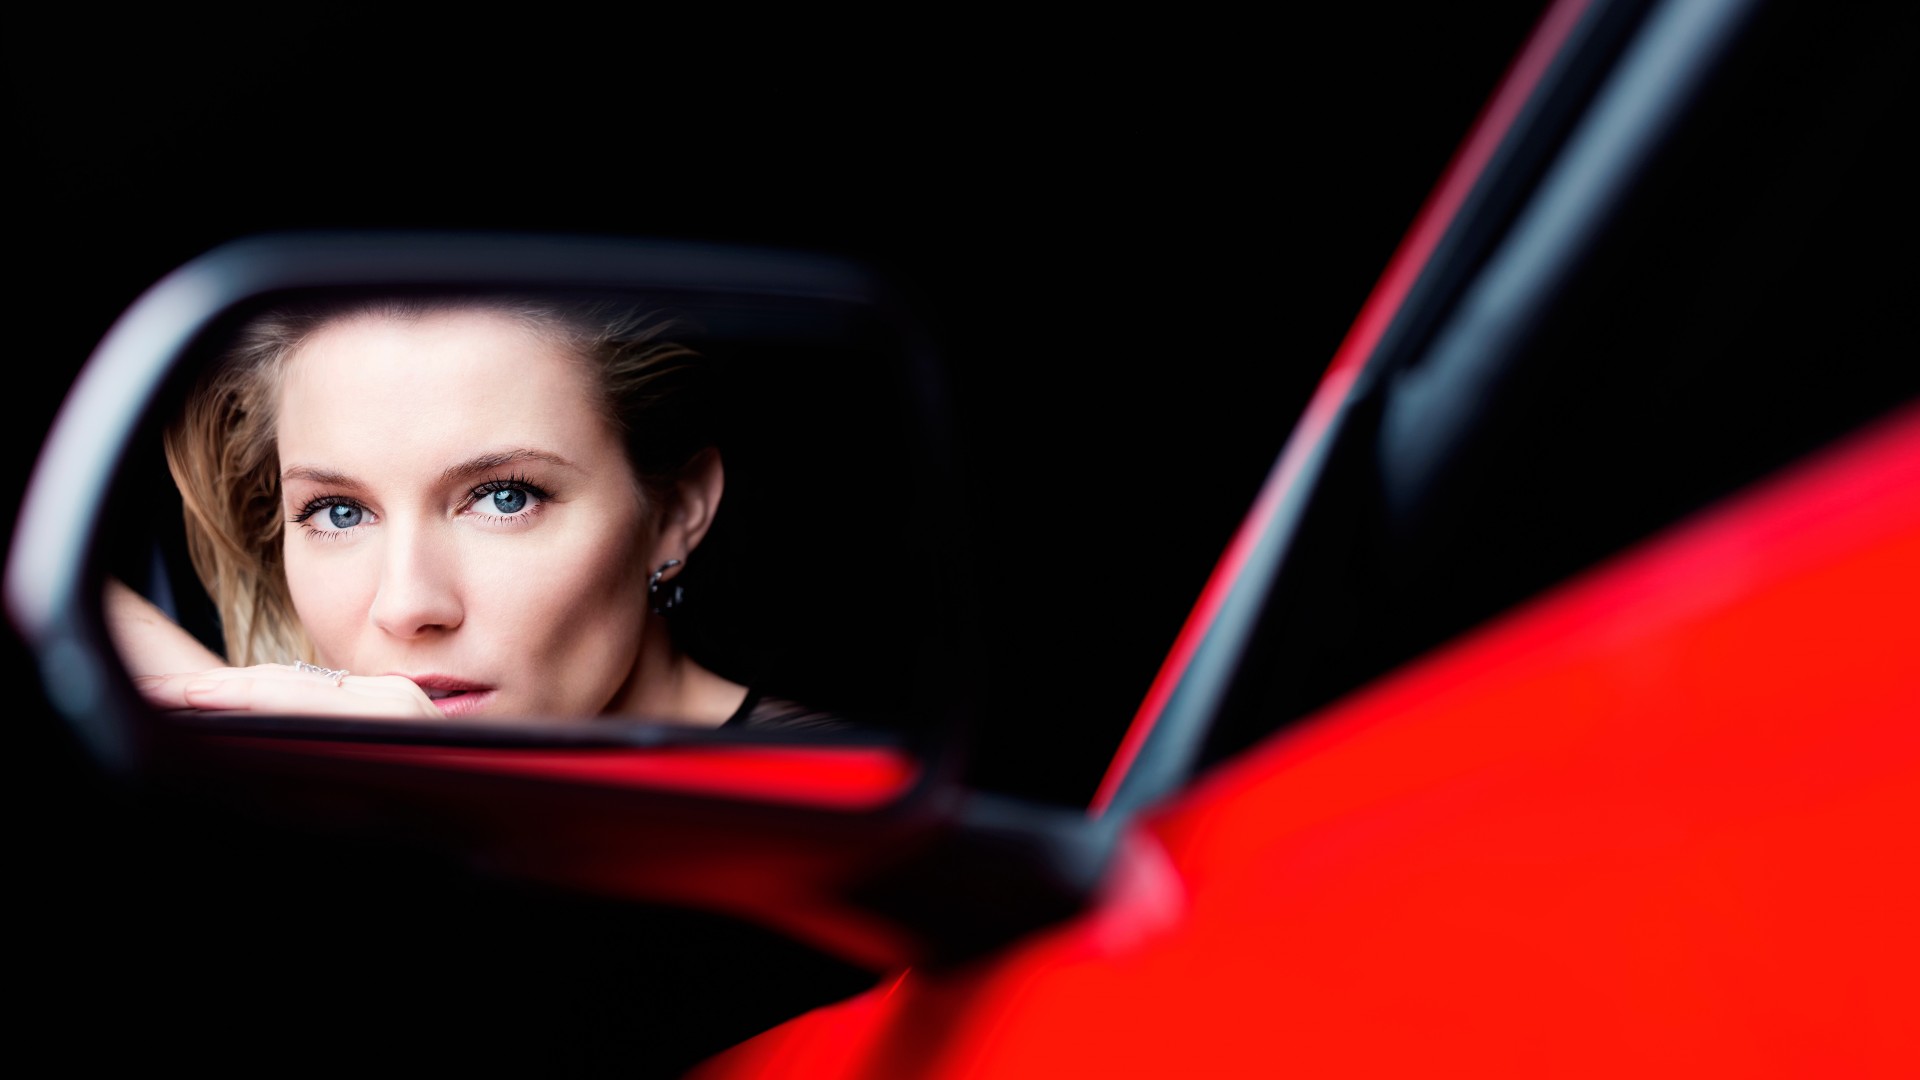 сиенна, сиена, миллер, актриса, красная, машина, отражение, зеркало, Sienna Miller, Actress, red, car, reflection, mirror (horizontal)